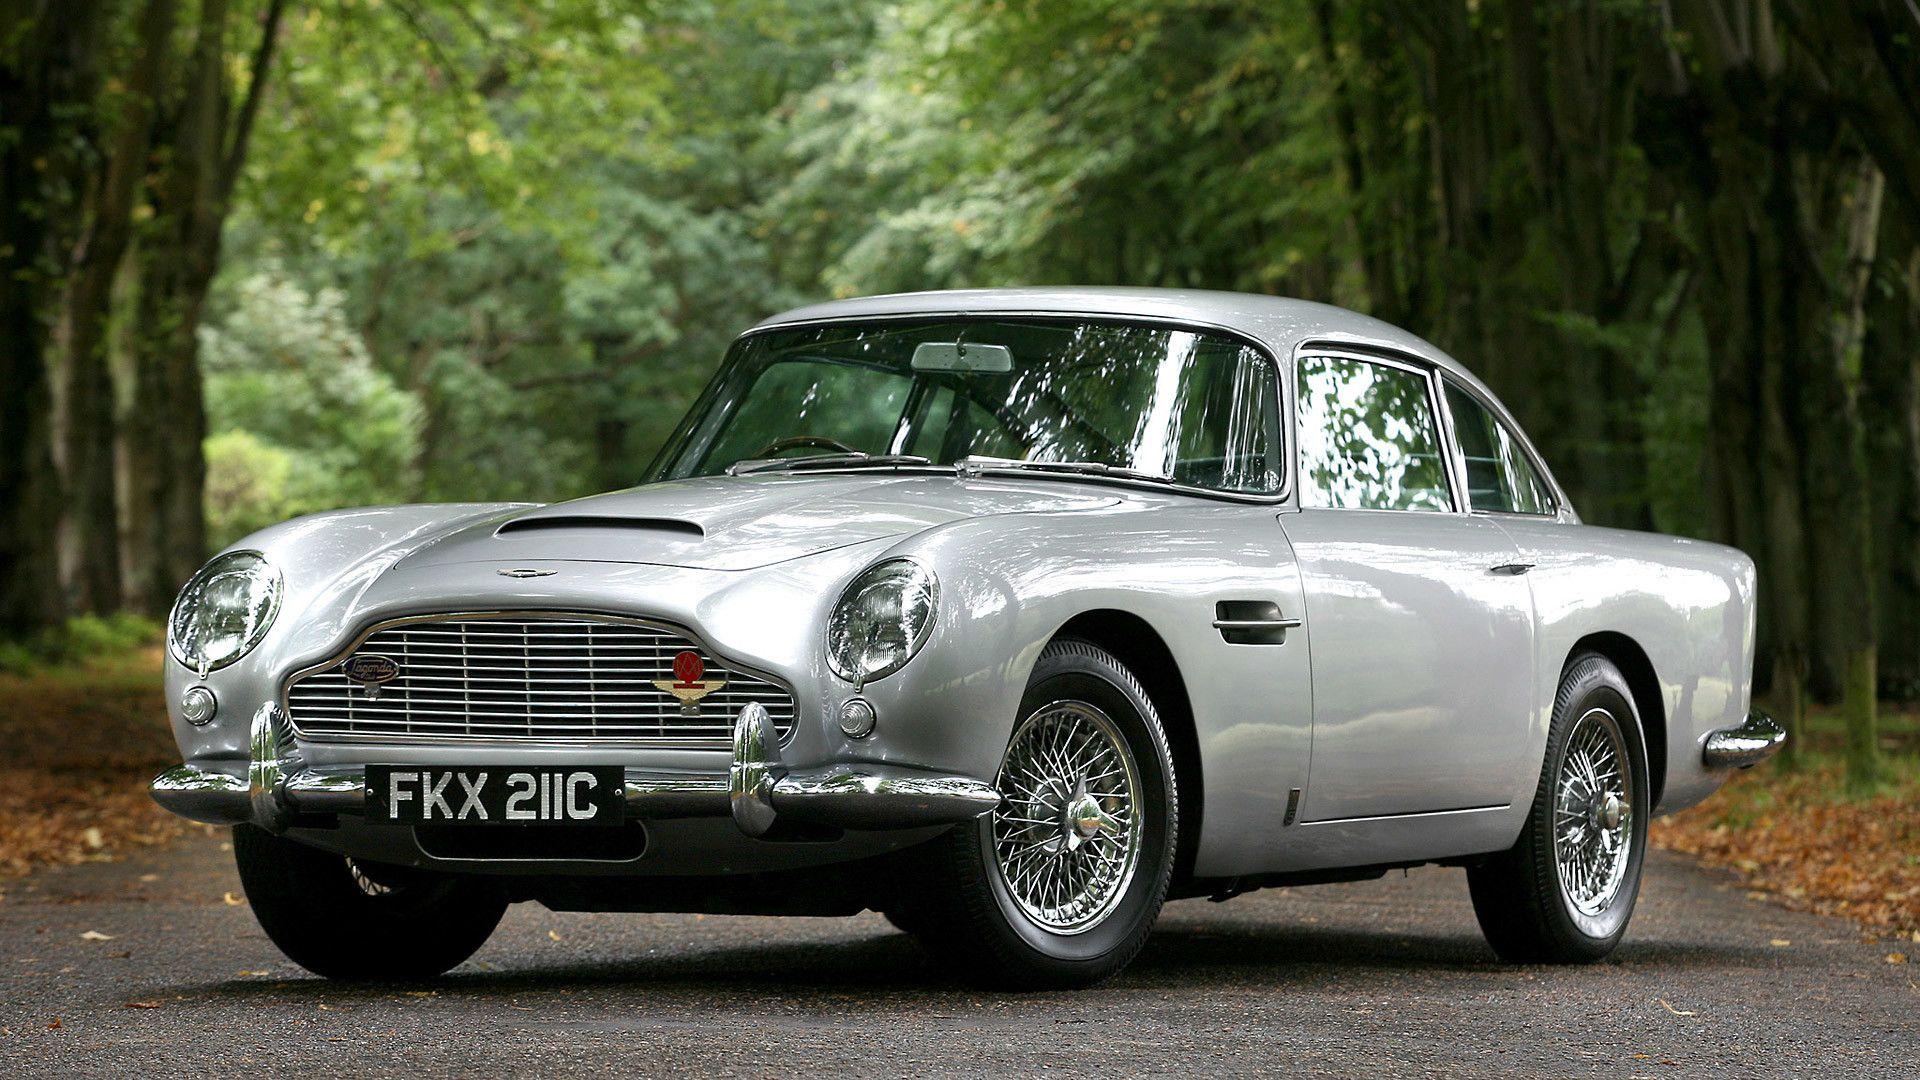 James Bond Aston Martin Wallpapers Top Free James Bond Aston Martin Backgrounds Wallpaperaccess